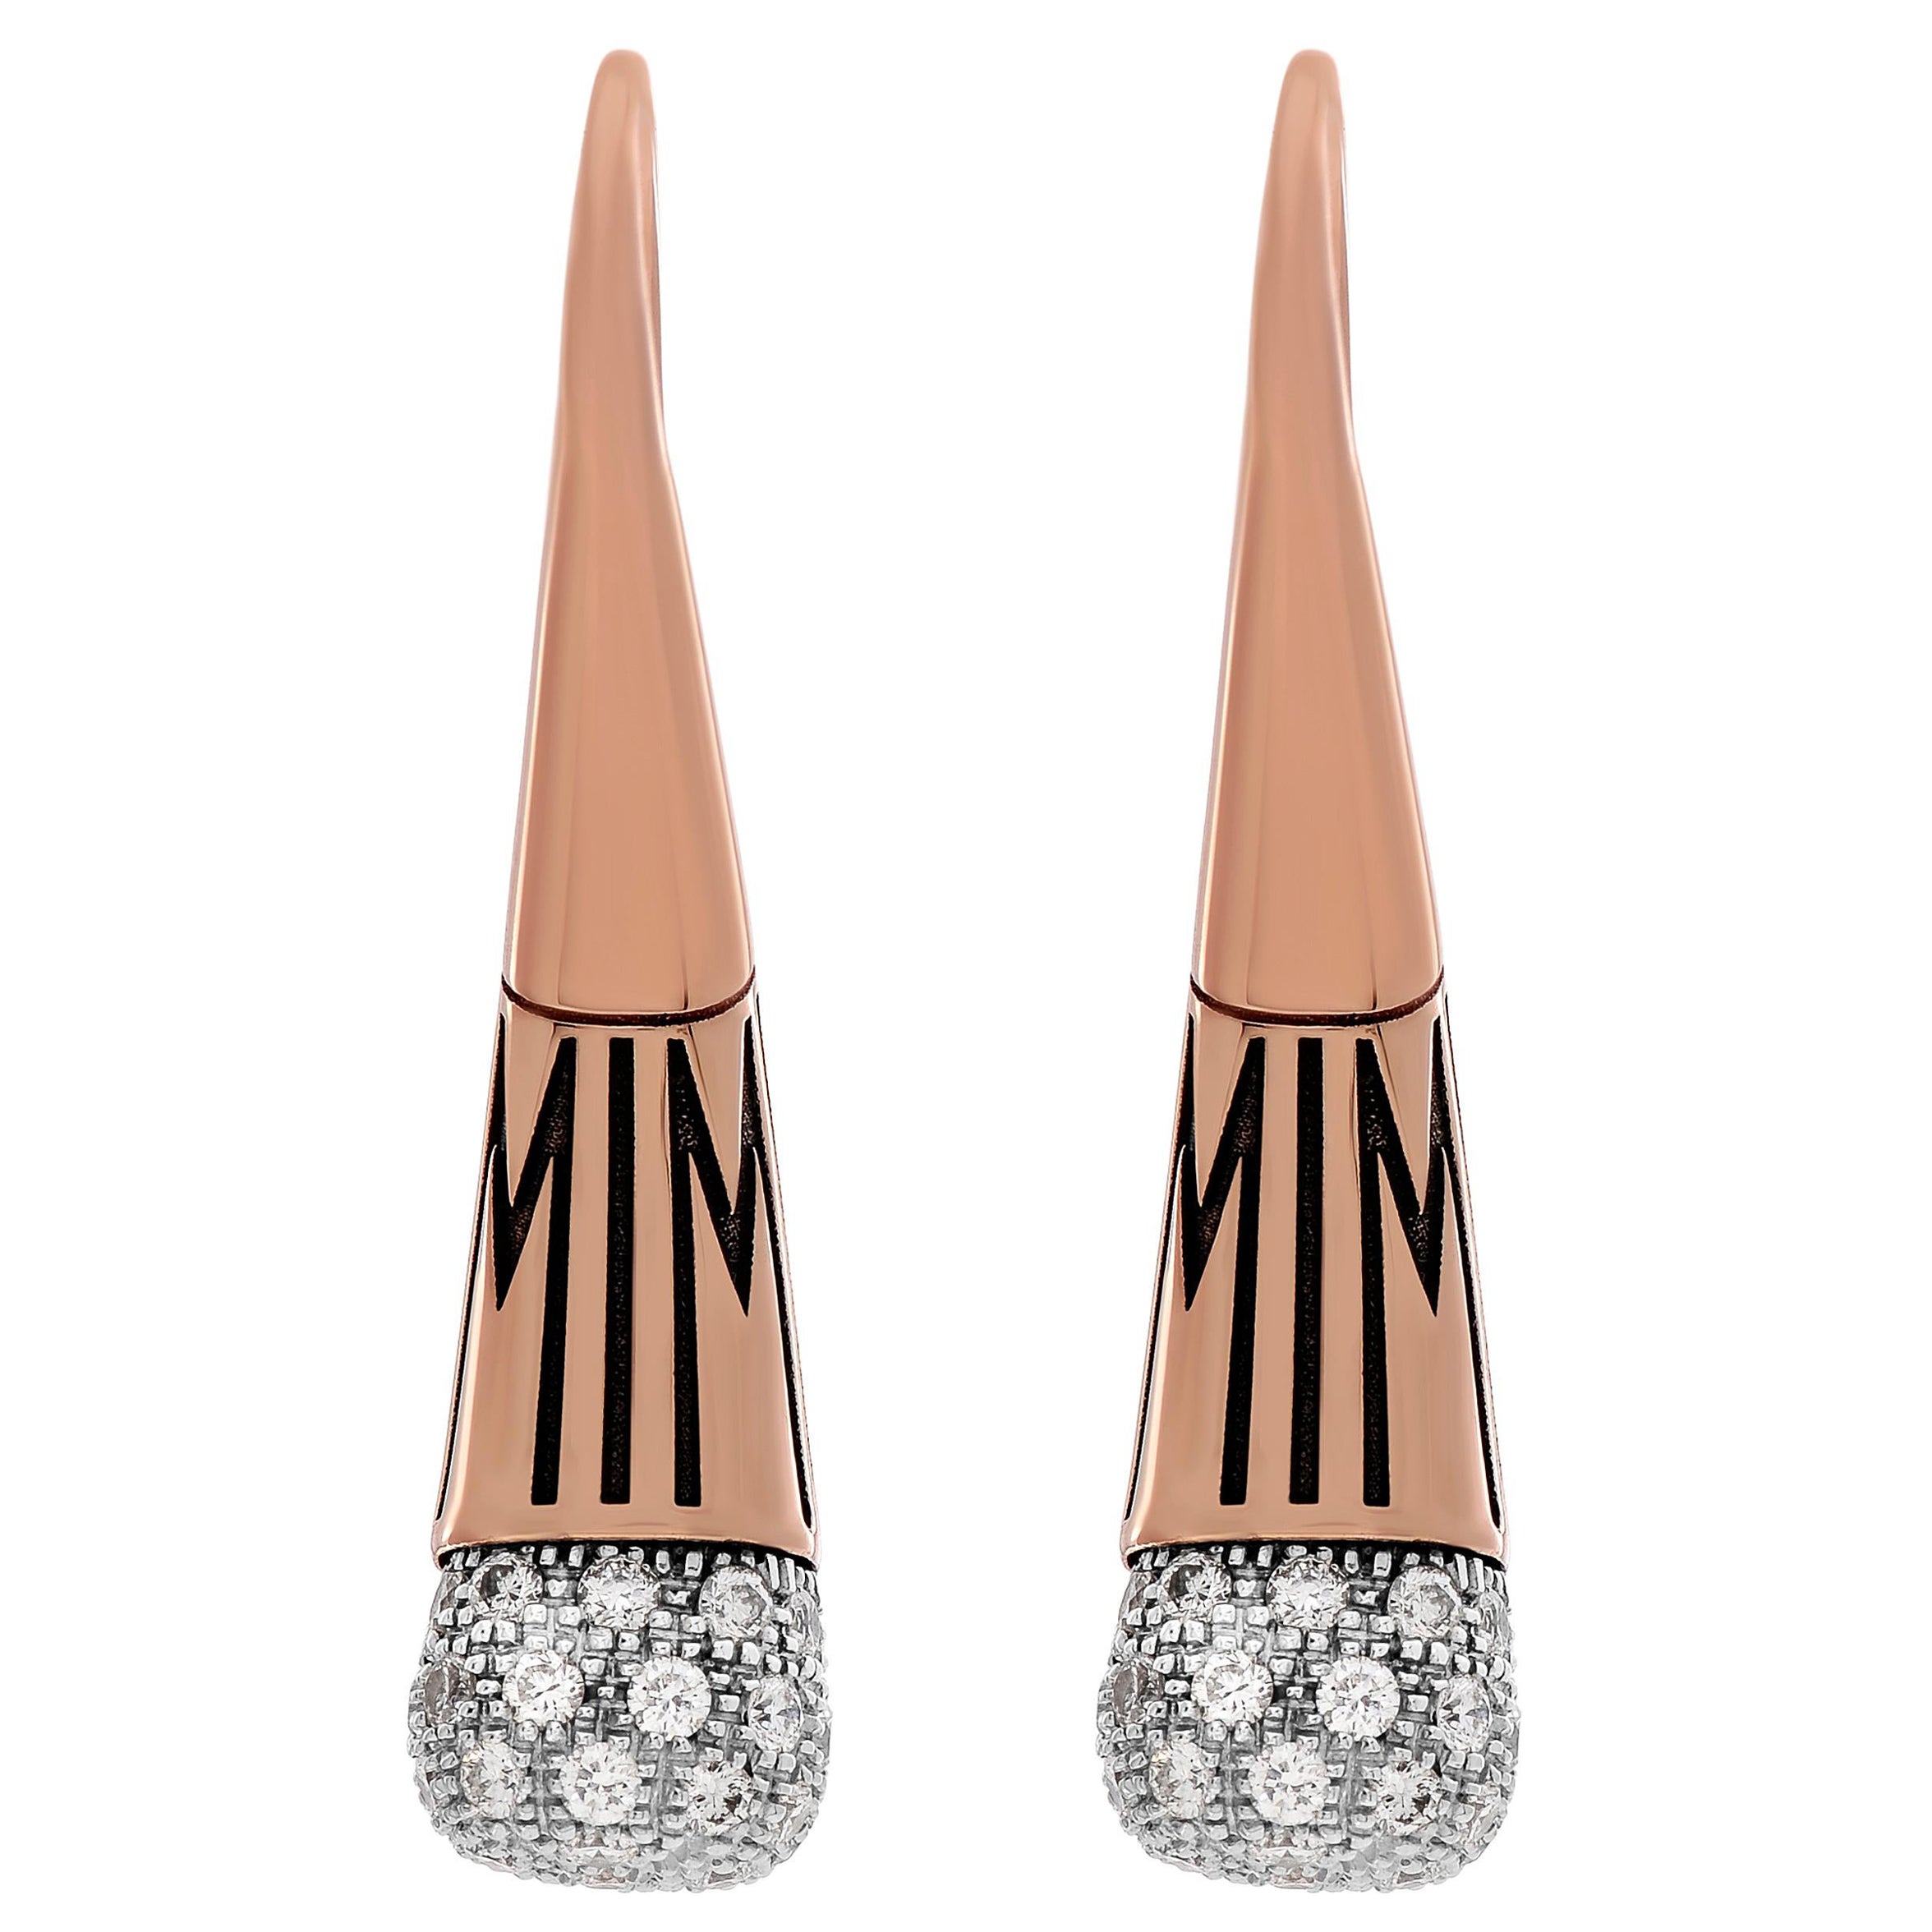 Mimi Milano Tam Tam 18k Rose & White Gold Diamond Drop Earrings